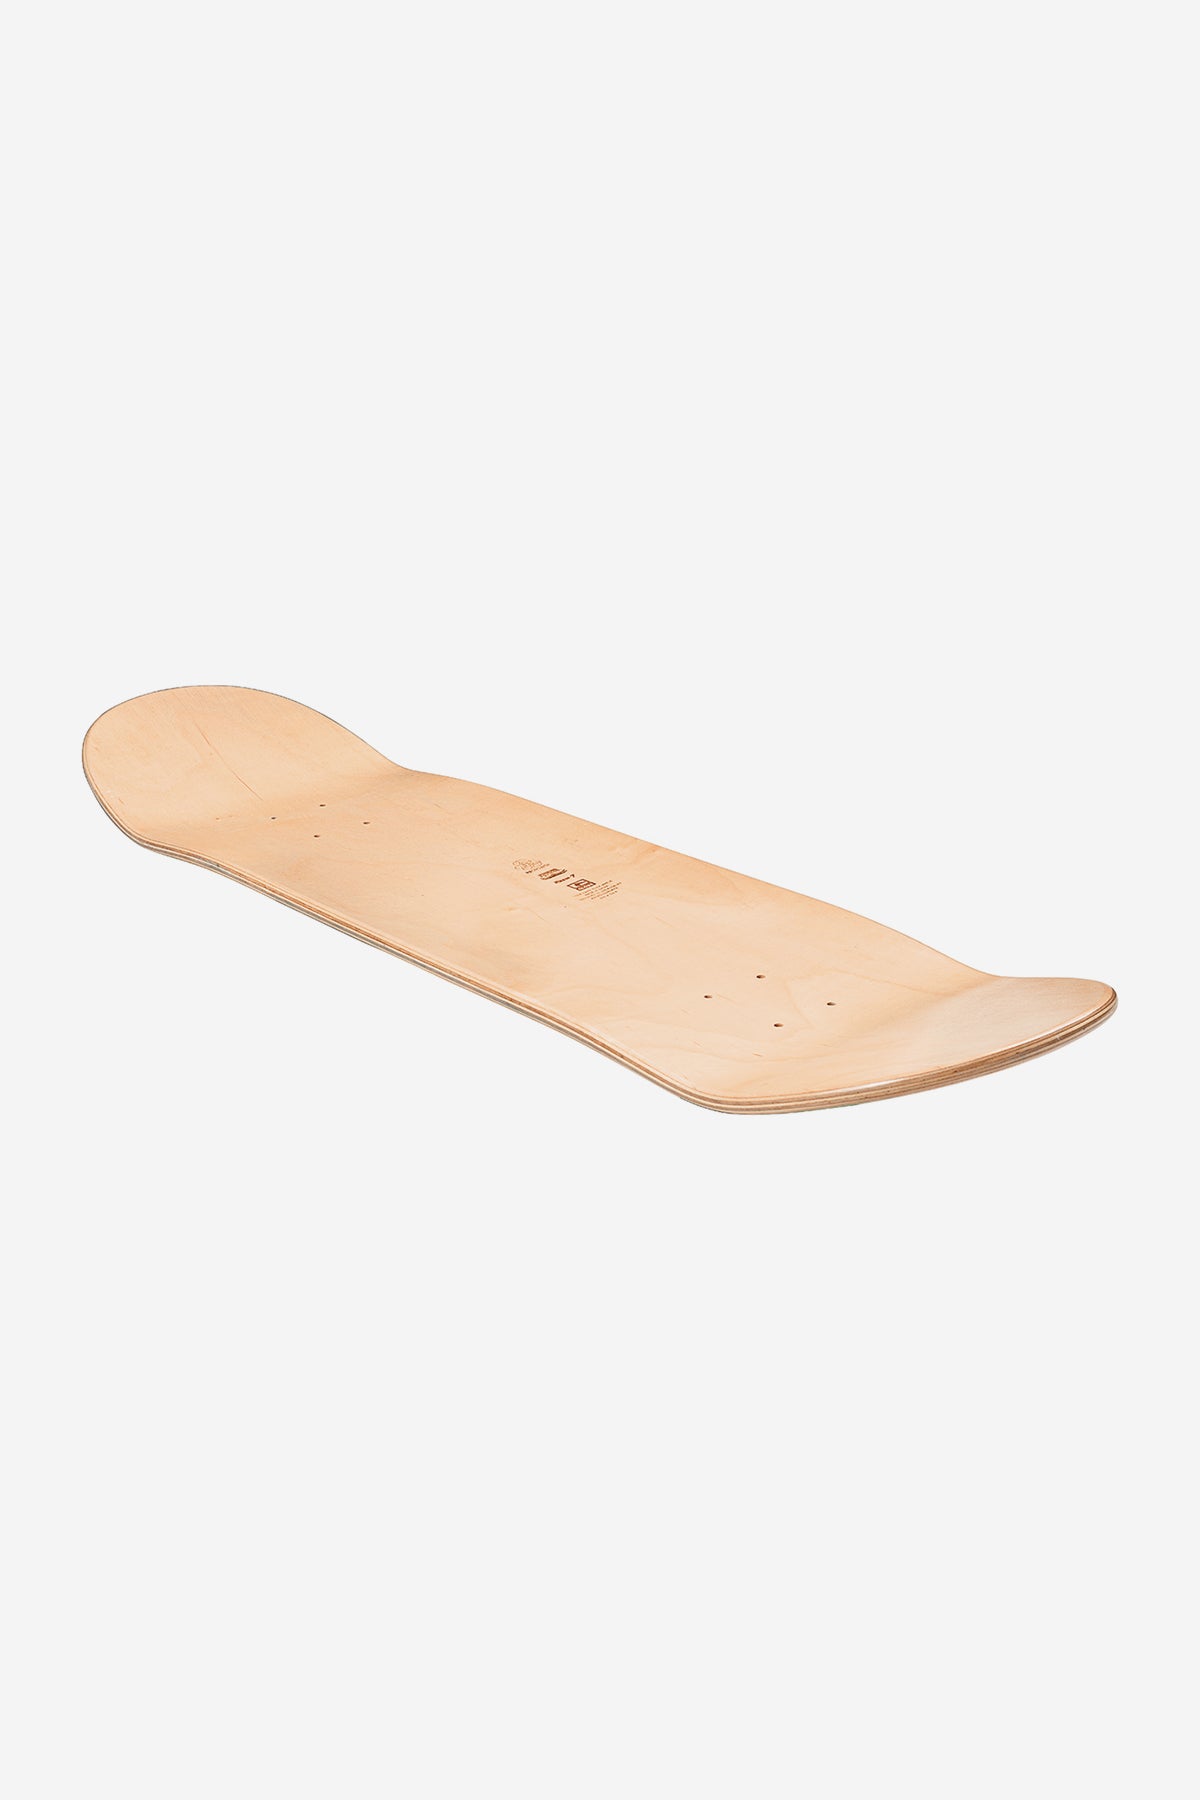 goodstock clay 8.5" skateboard deck